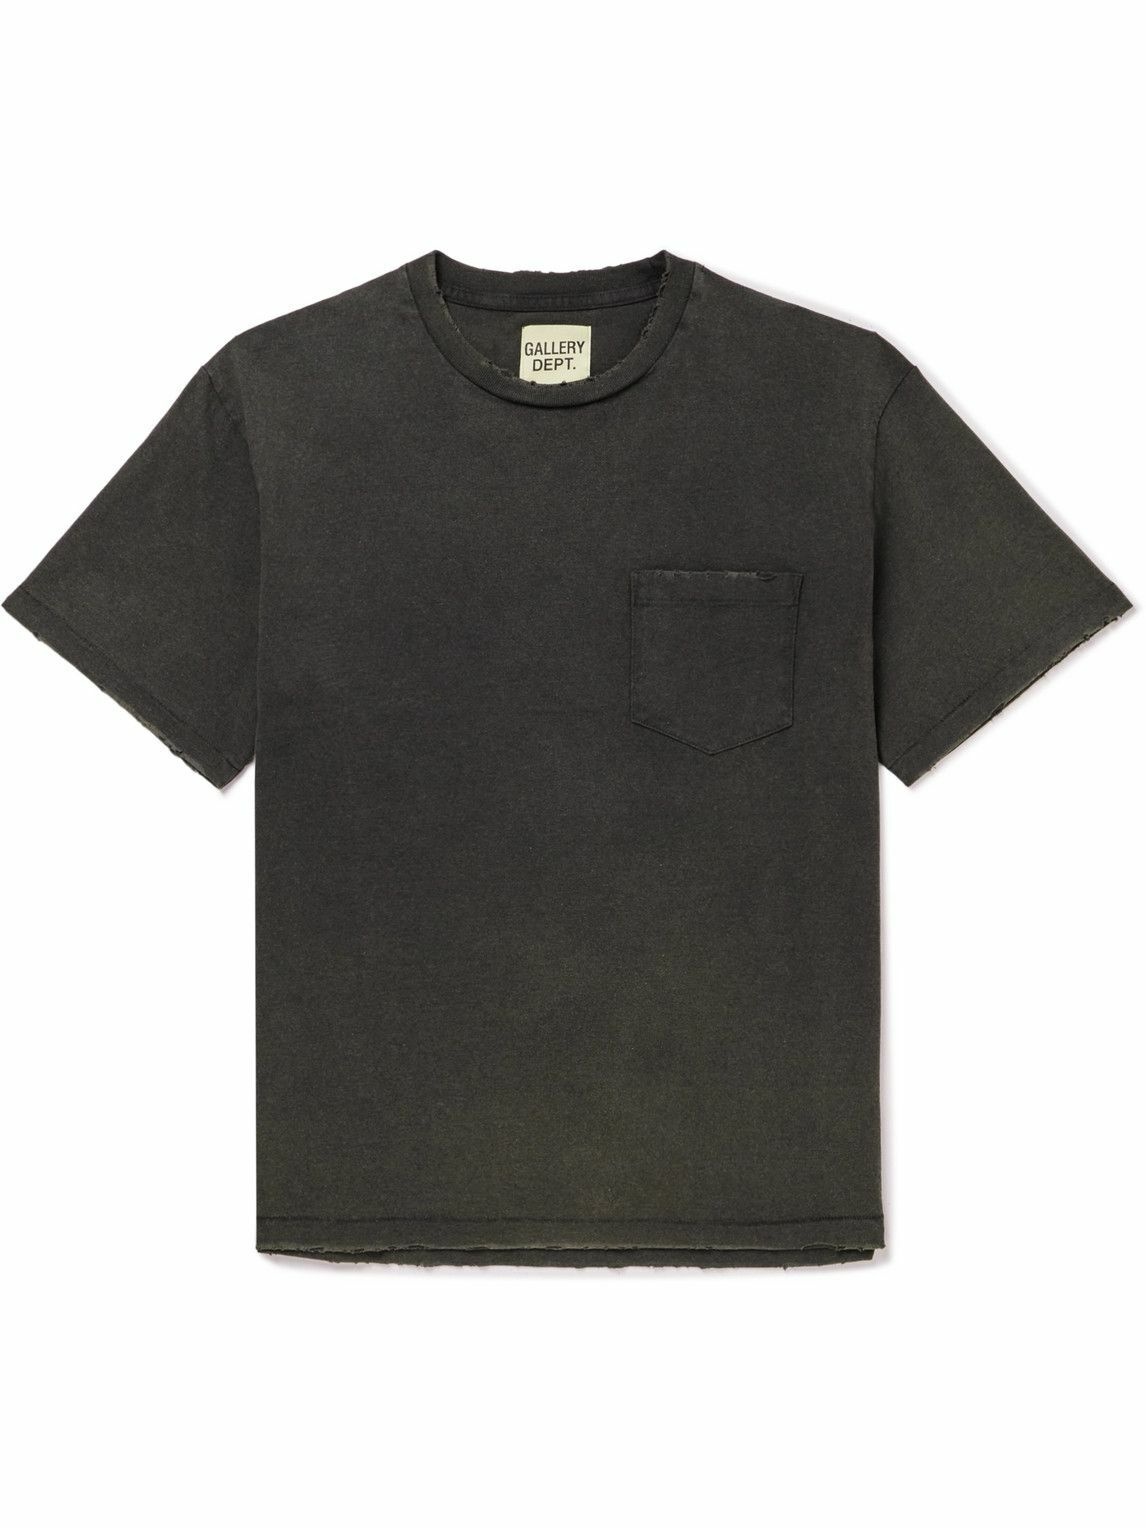 Gallery Dept. - Cotton-Jersey T-Shirt - Black Gallery Dept.